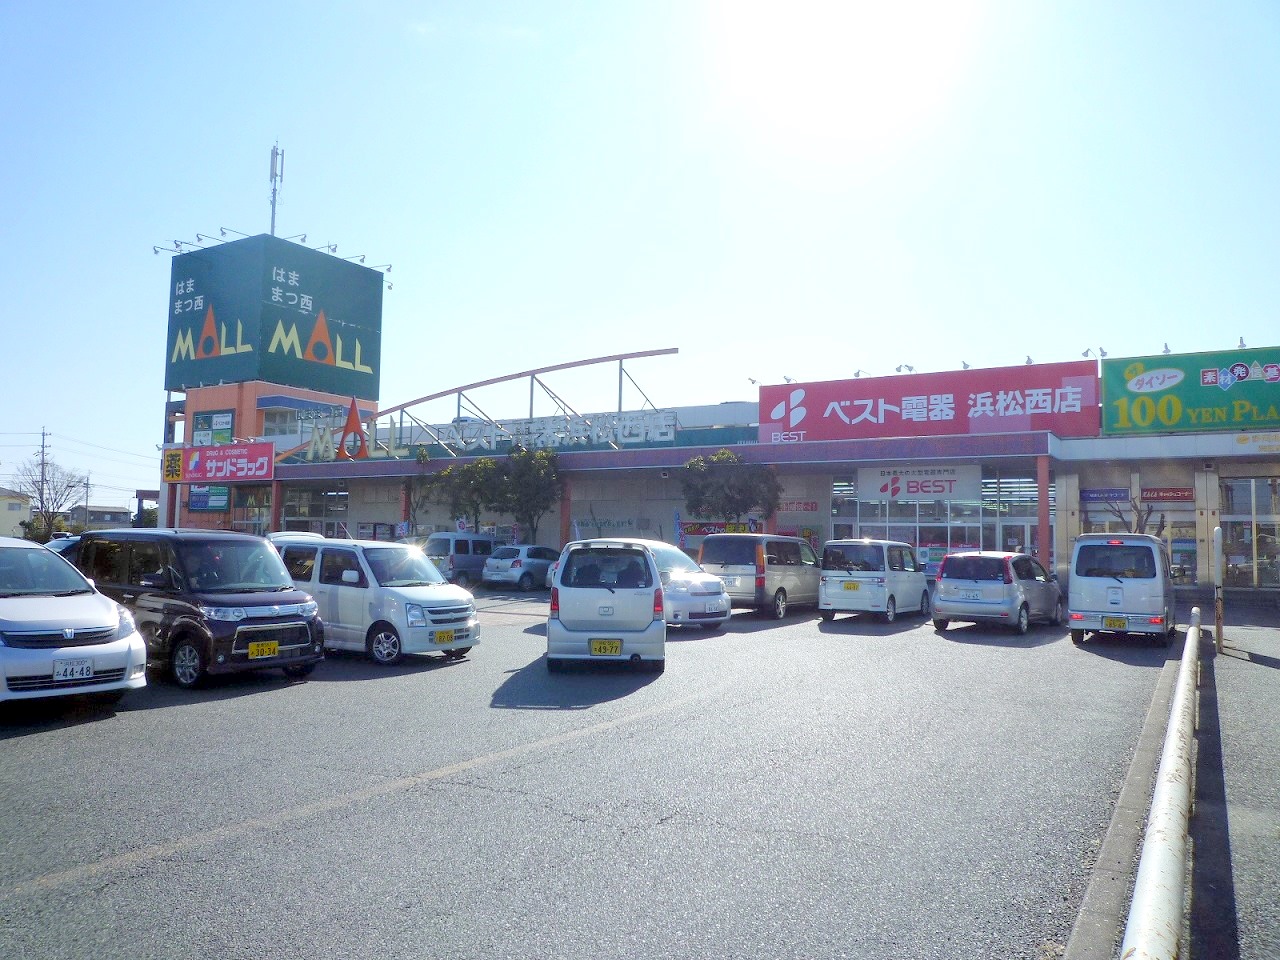 Shopping centre. 892m until Hamamatsunishi MALL (shopping center)